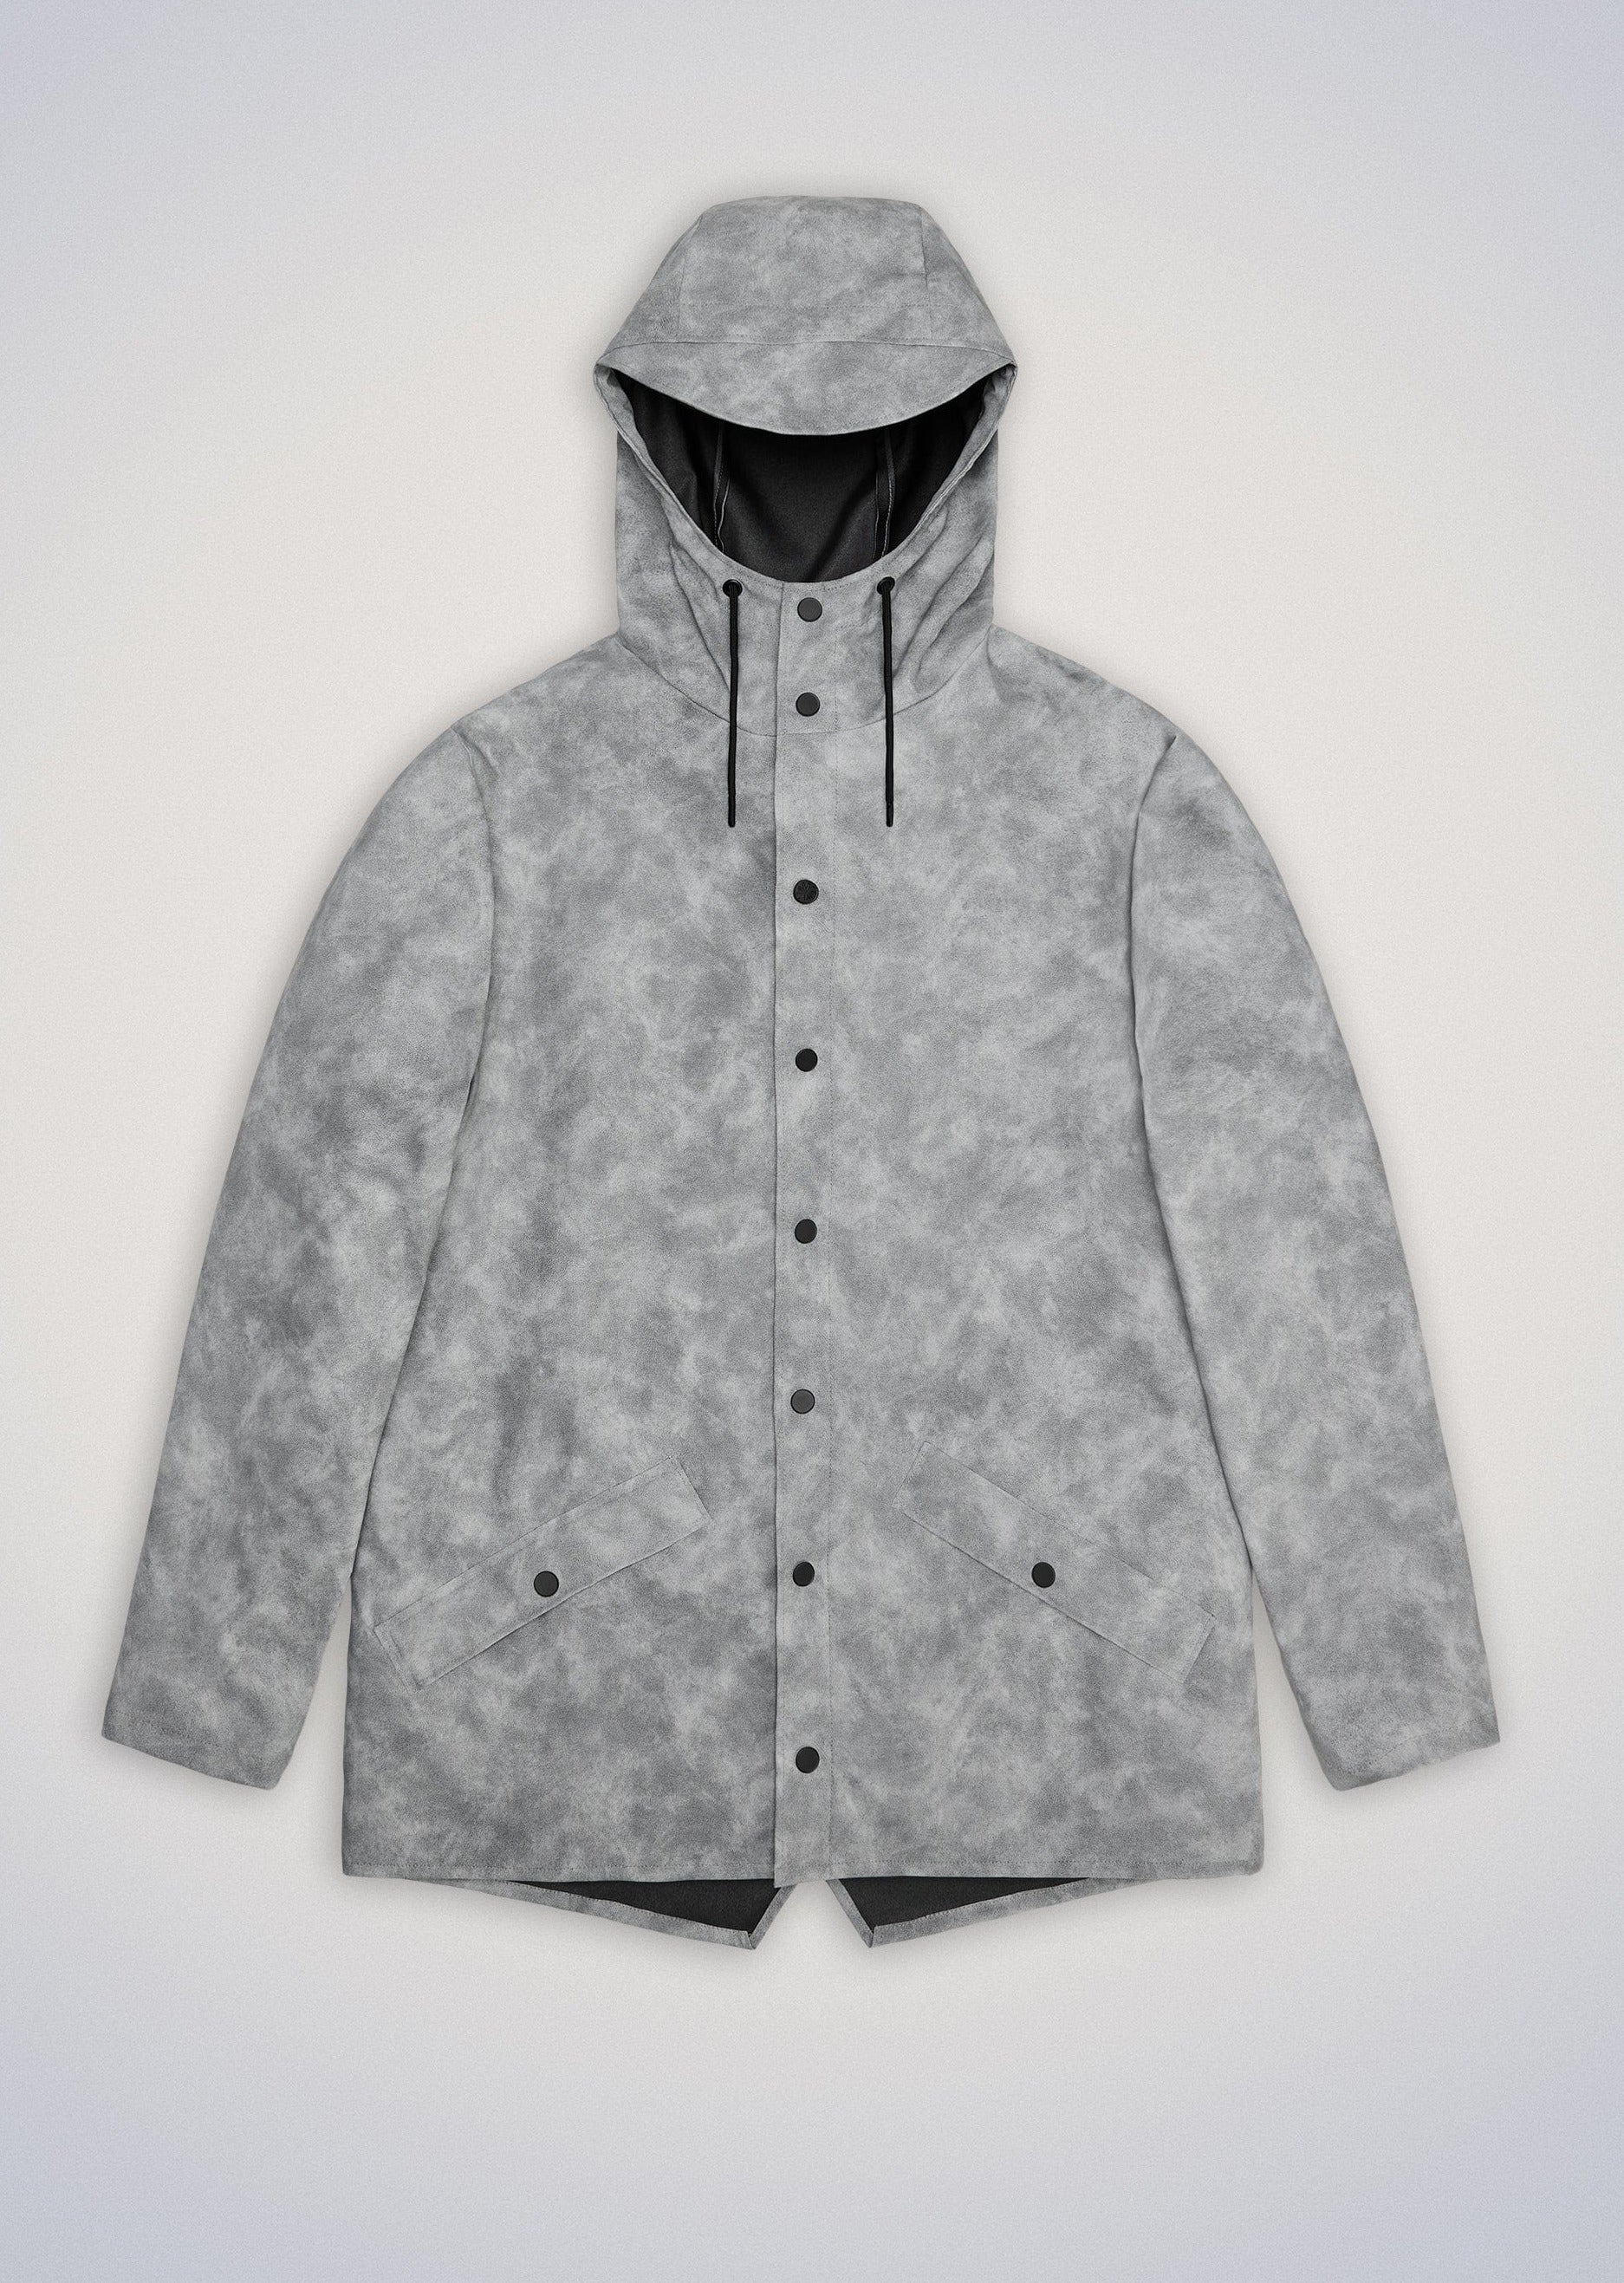 Rains Veste/Blouson Distressed Grey / XS Imperméable Rains - Jacket